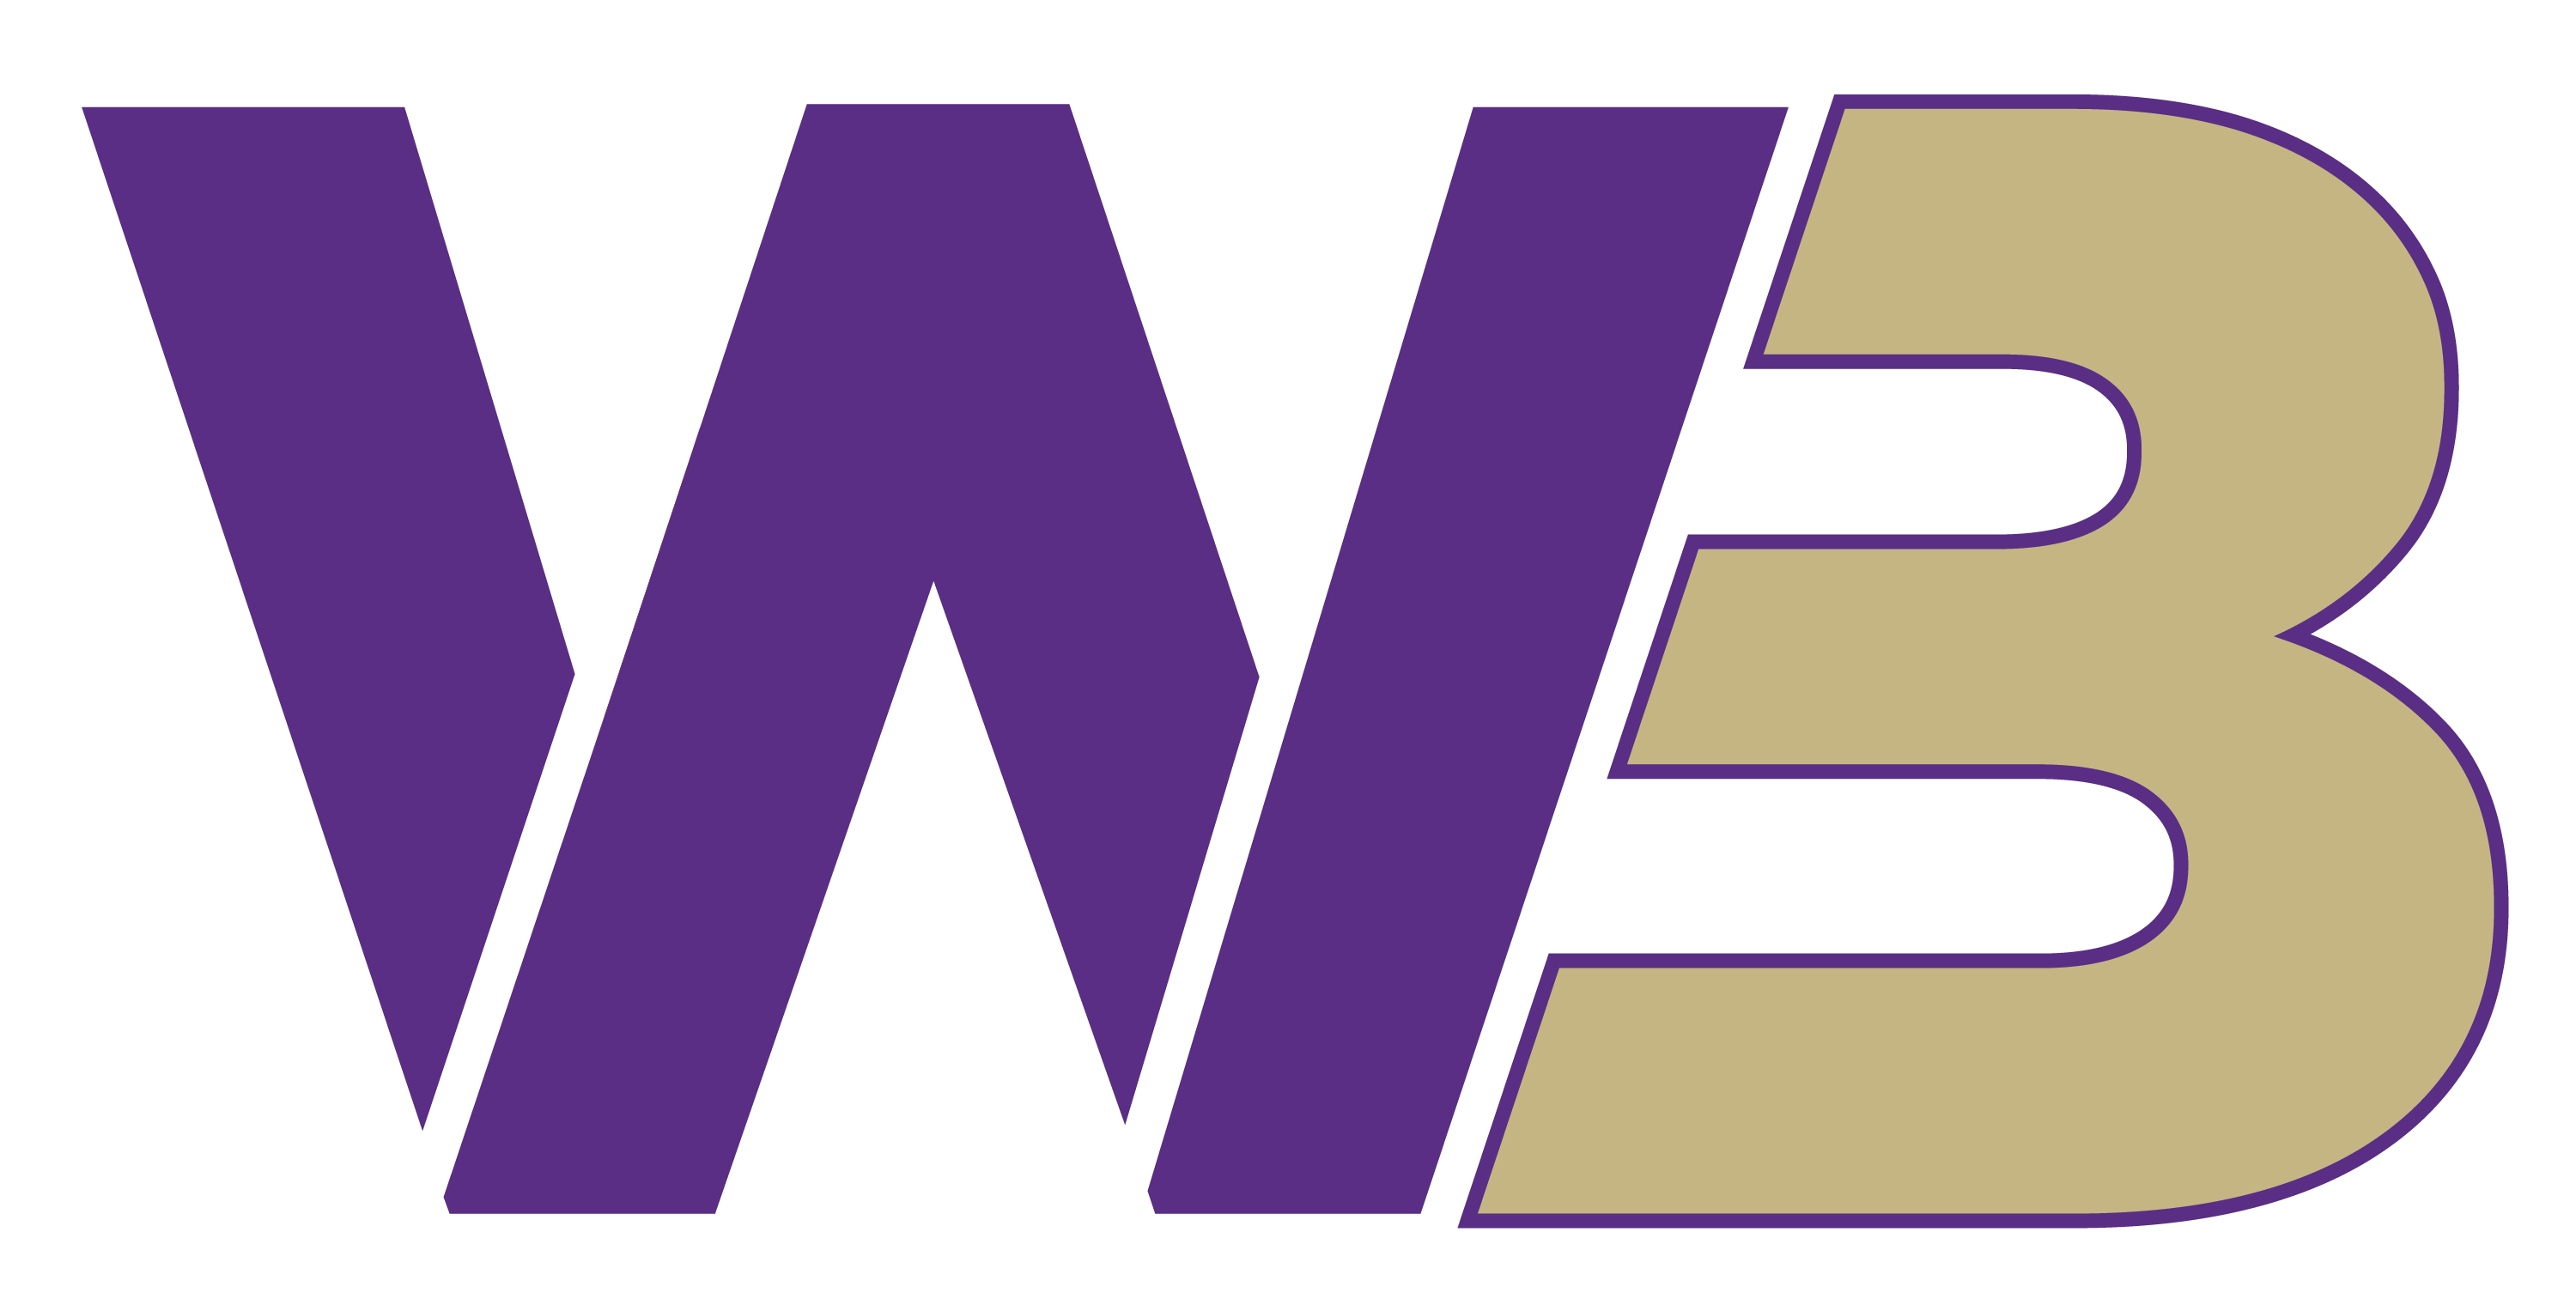 WB logo png